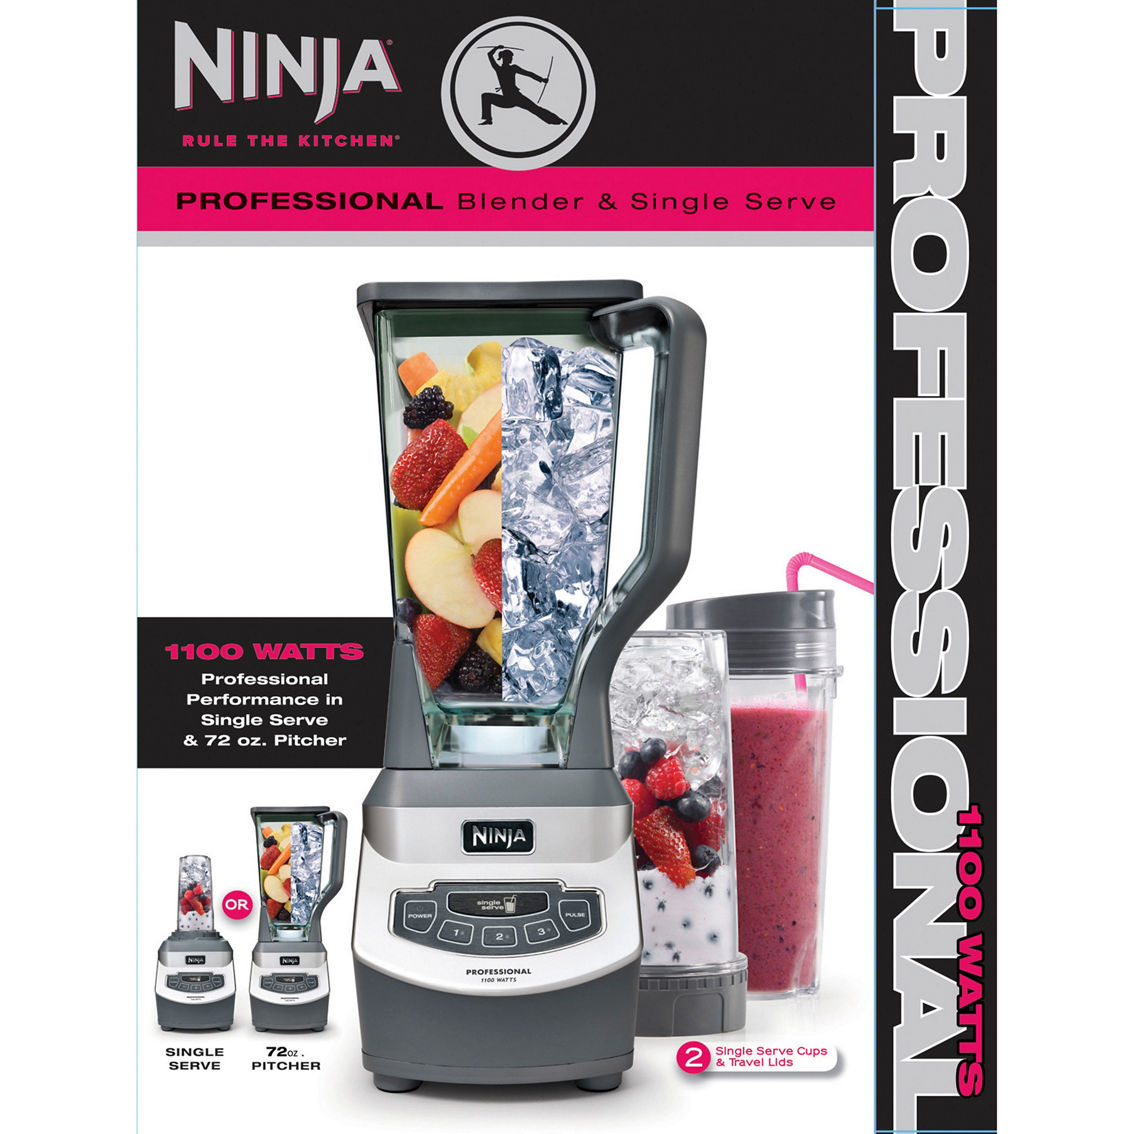 Ninja Professional Blender with Single Serve - Image 6 of 6